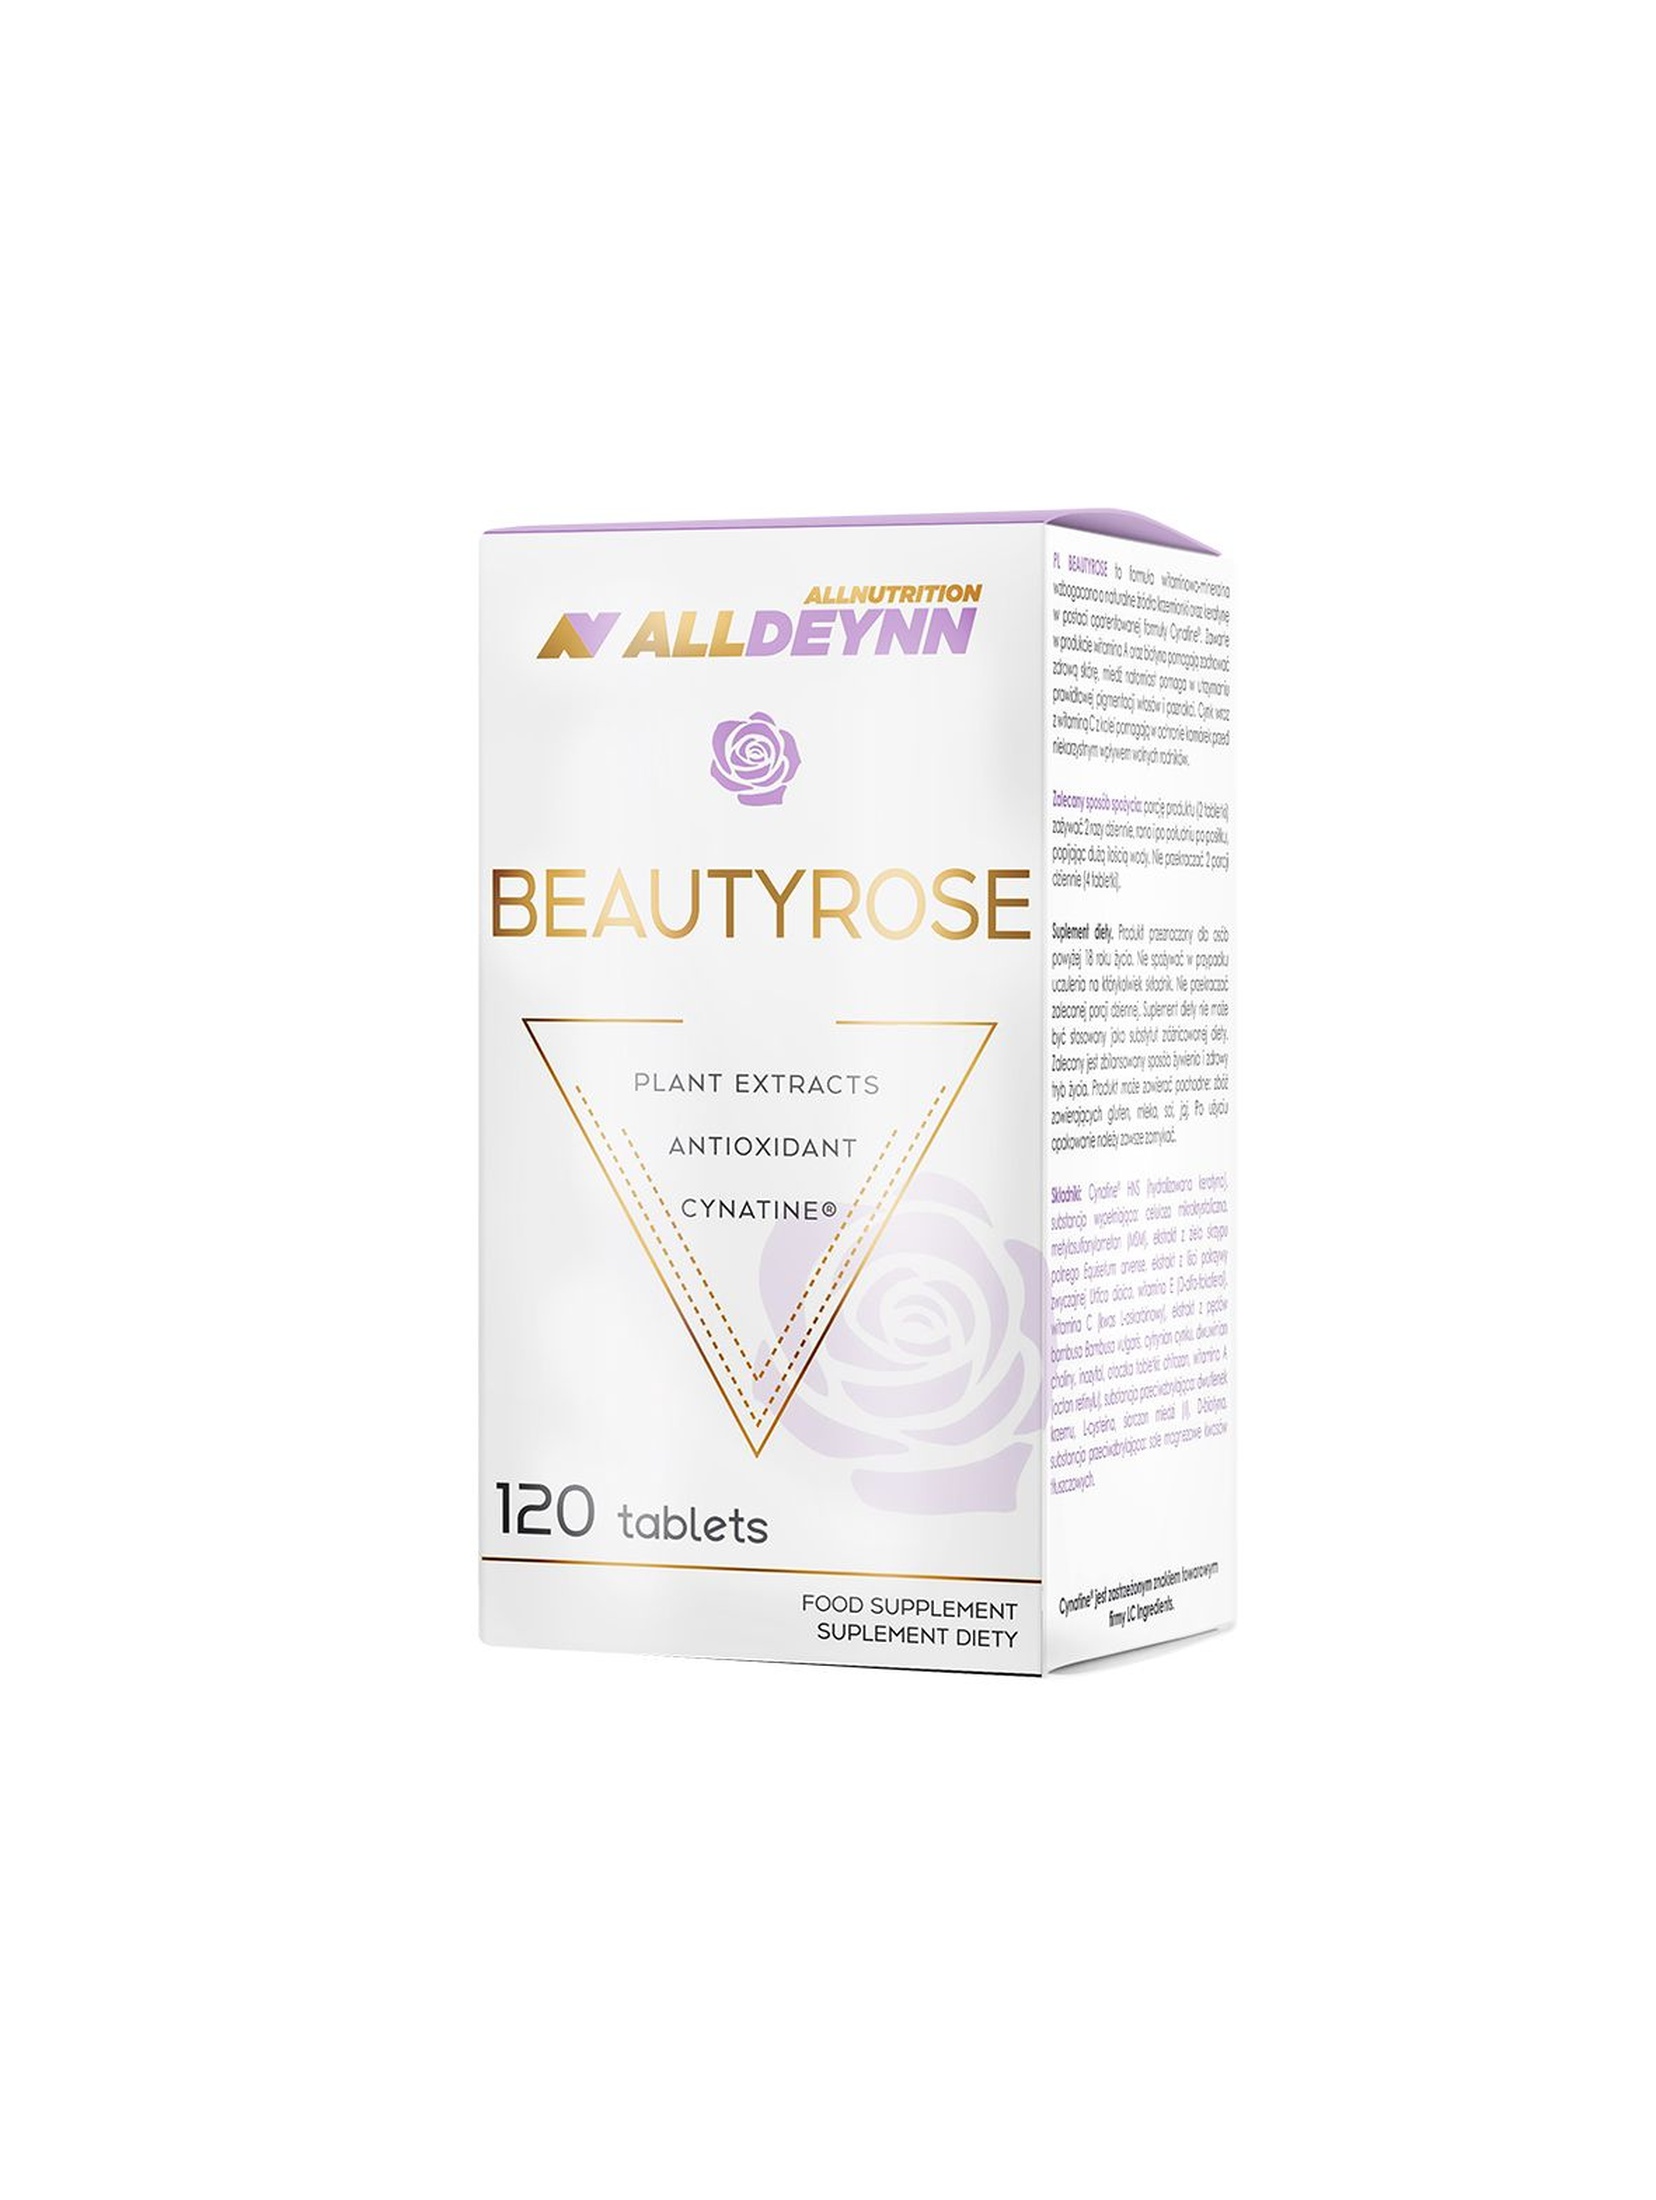 Suplementy diety - Allnutrition ALLDEYNN Beautyrose - 120 kapsułek